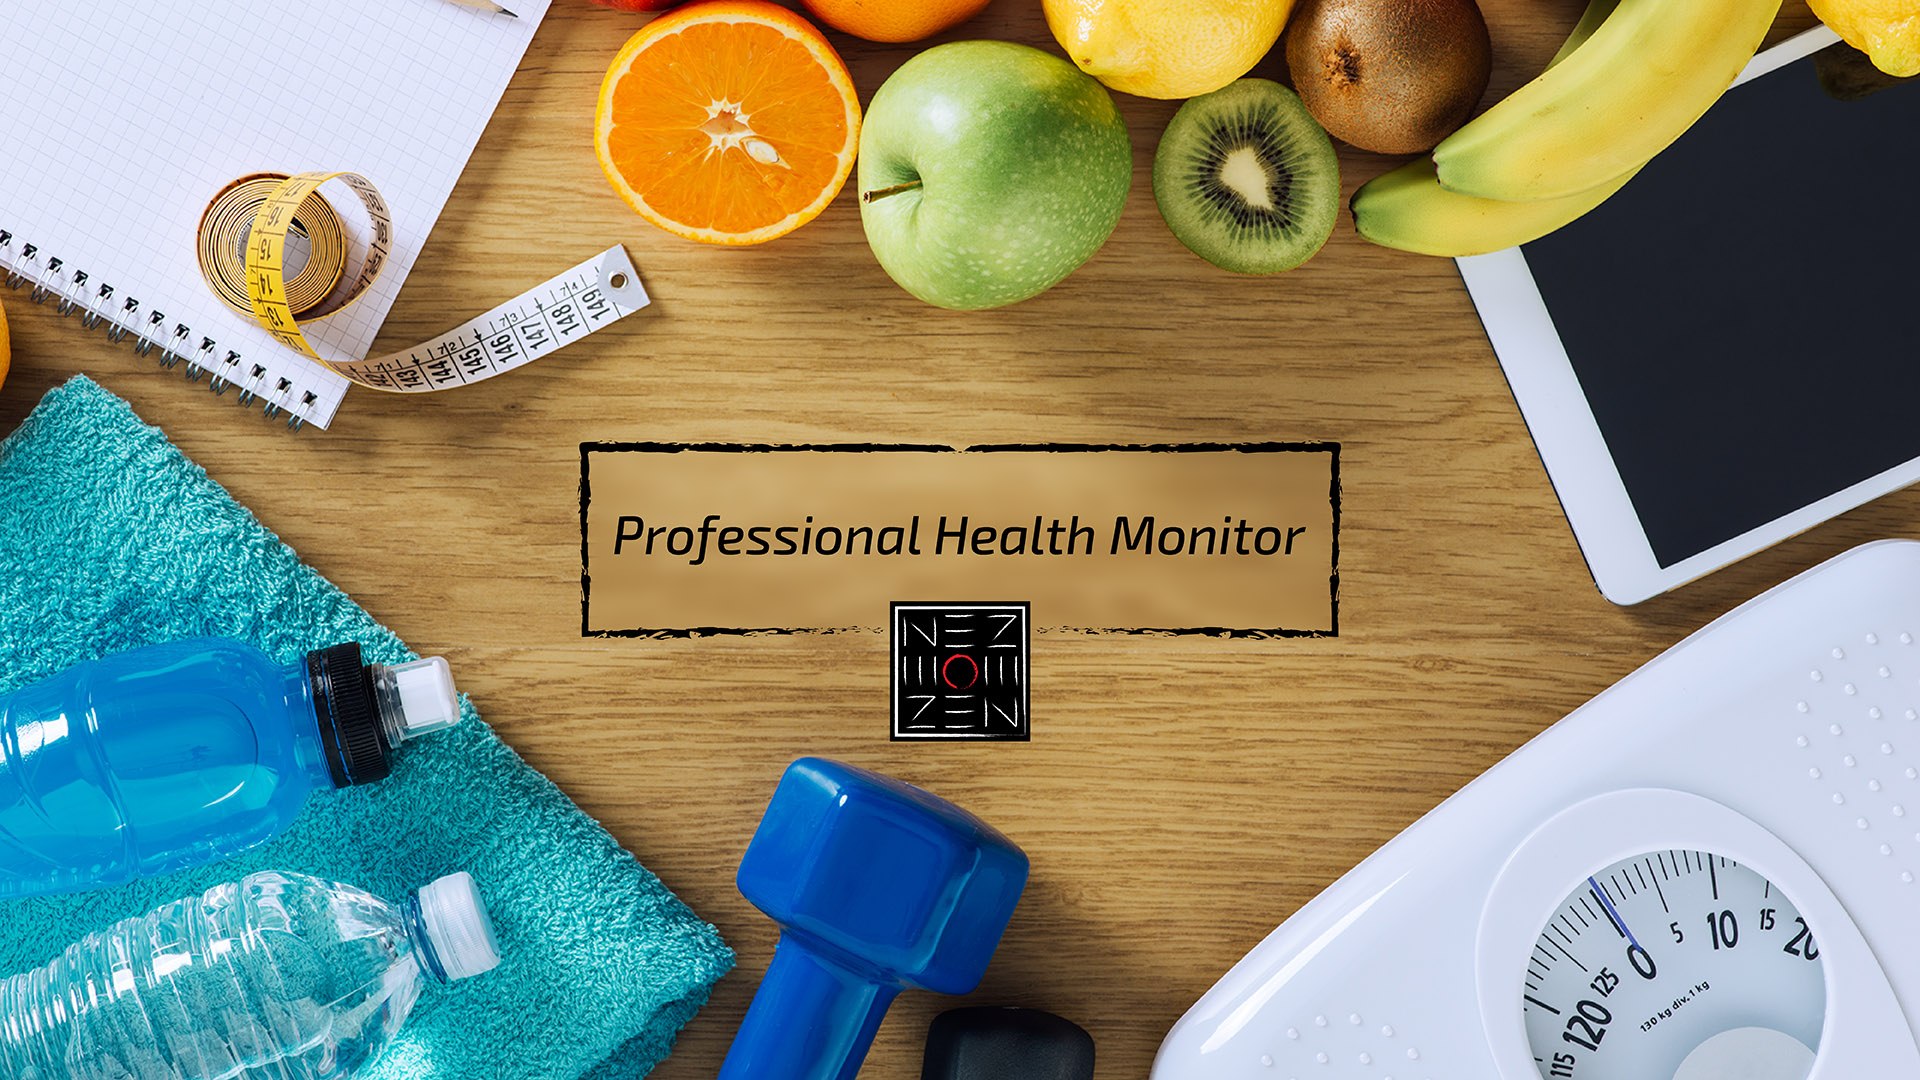 Professional Health Monitor